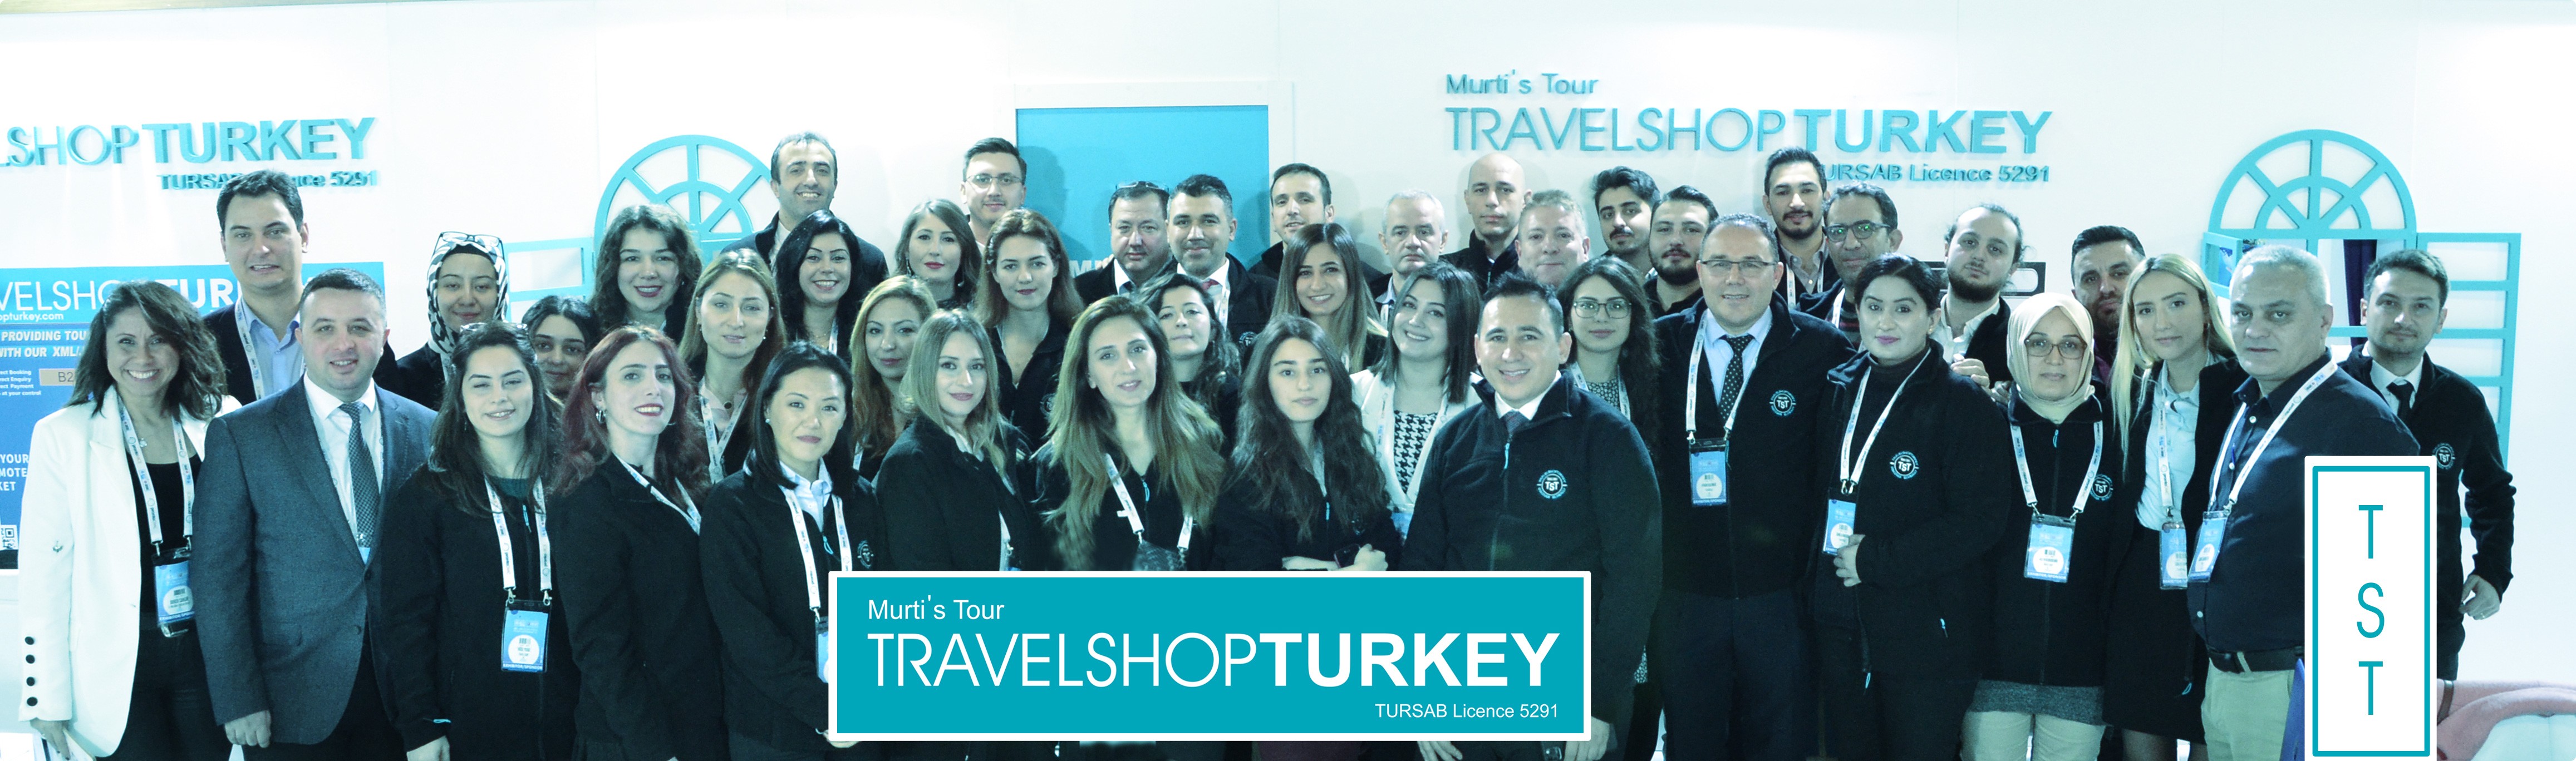 travel shop turkey about us